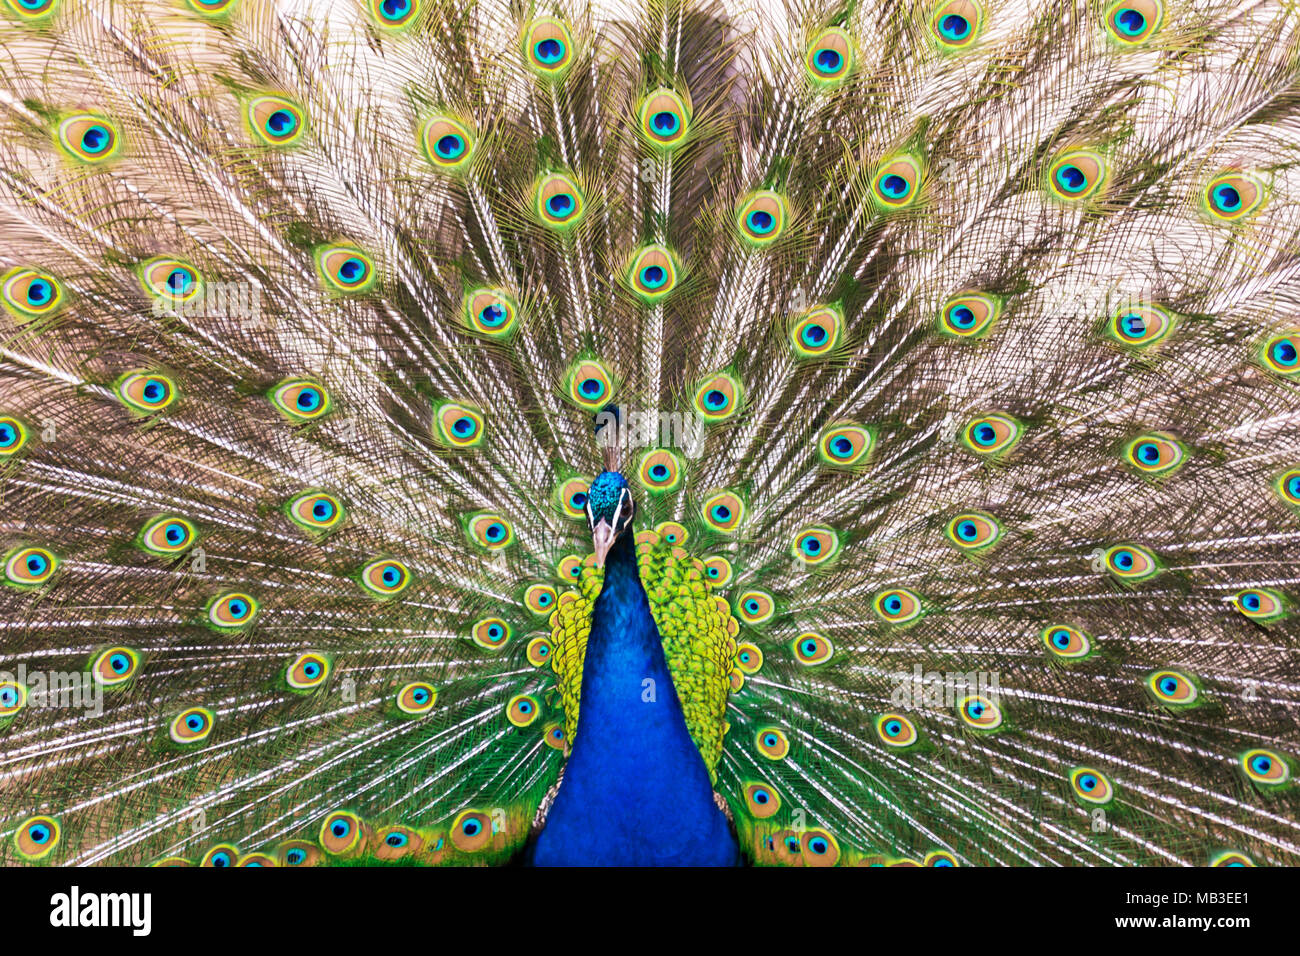 Peacock Federbeine mit bunten Federn Stockfoto